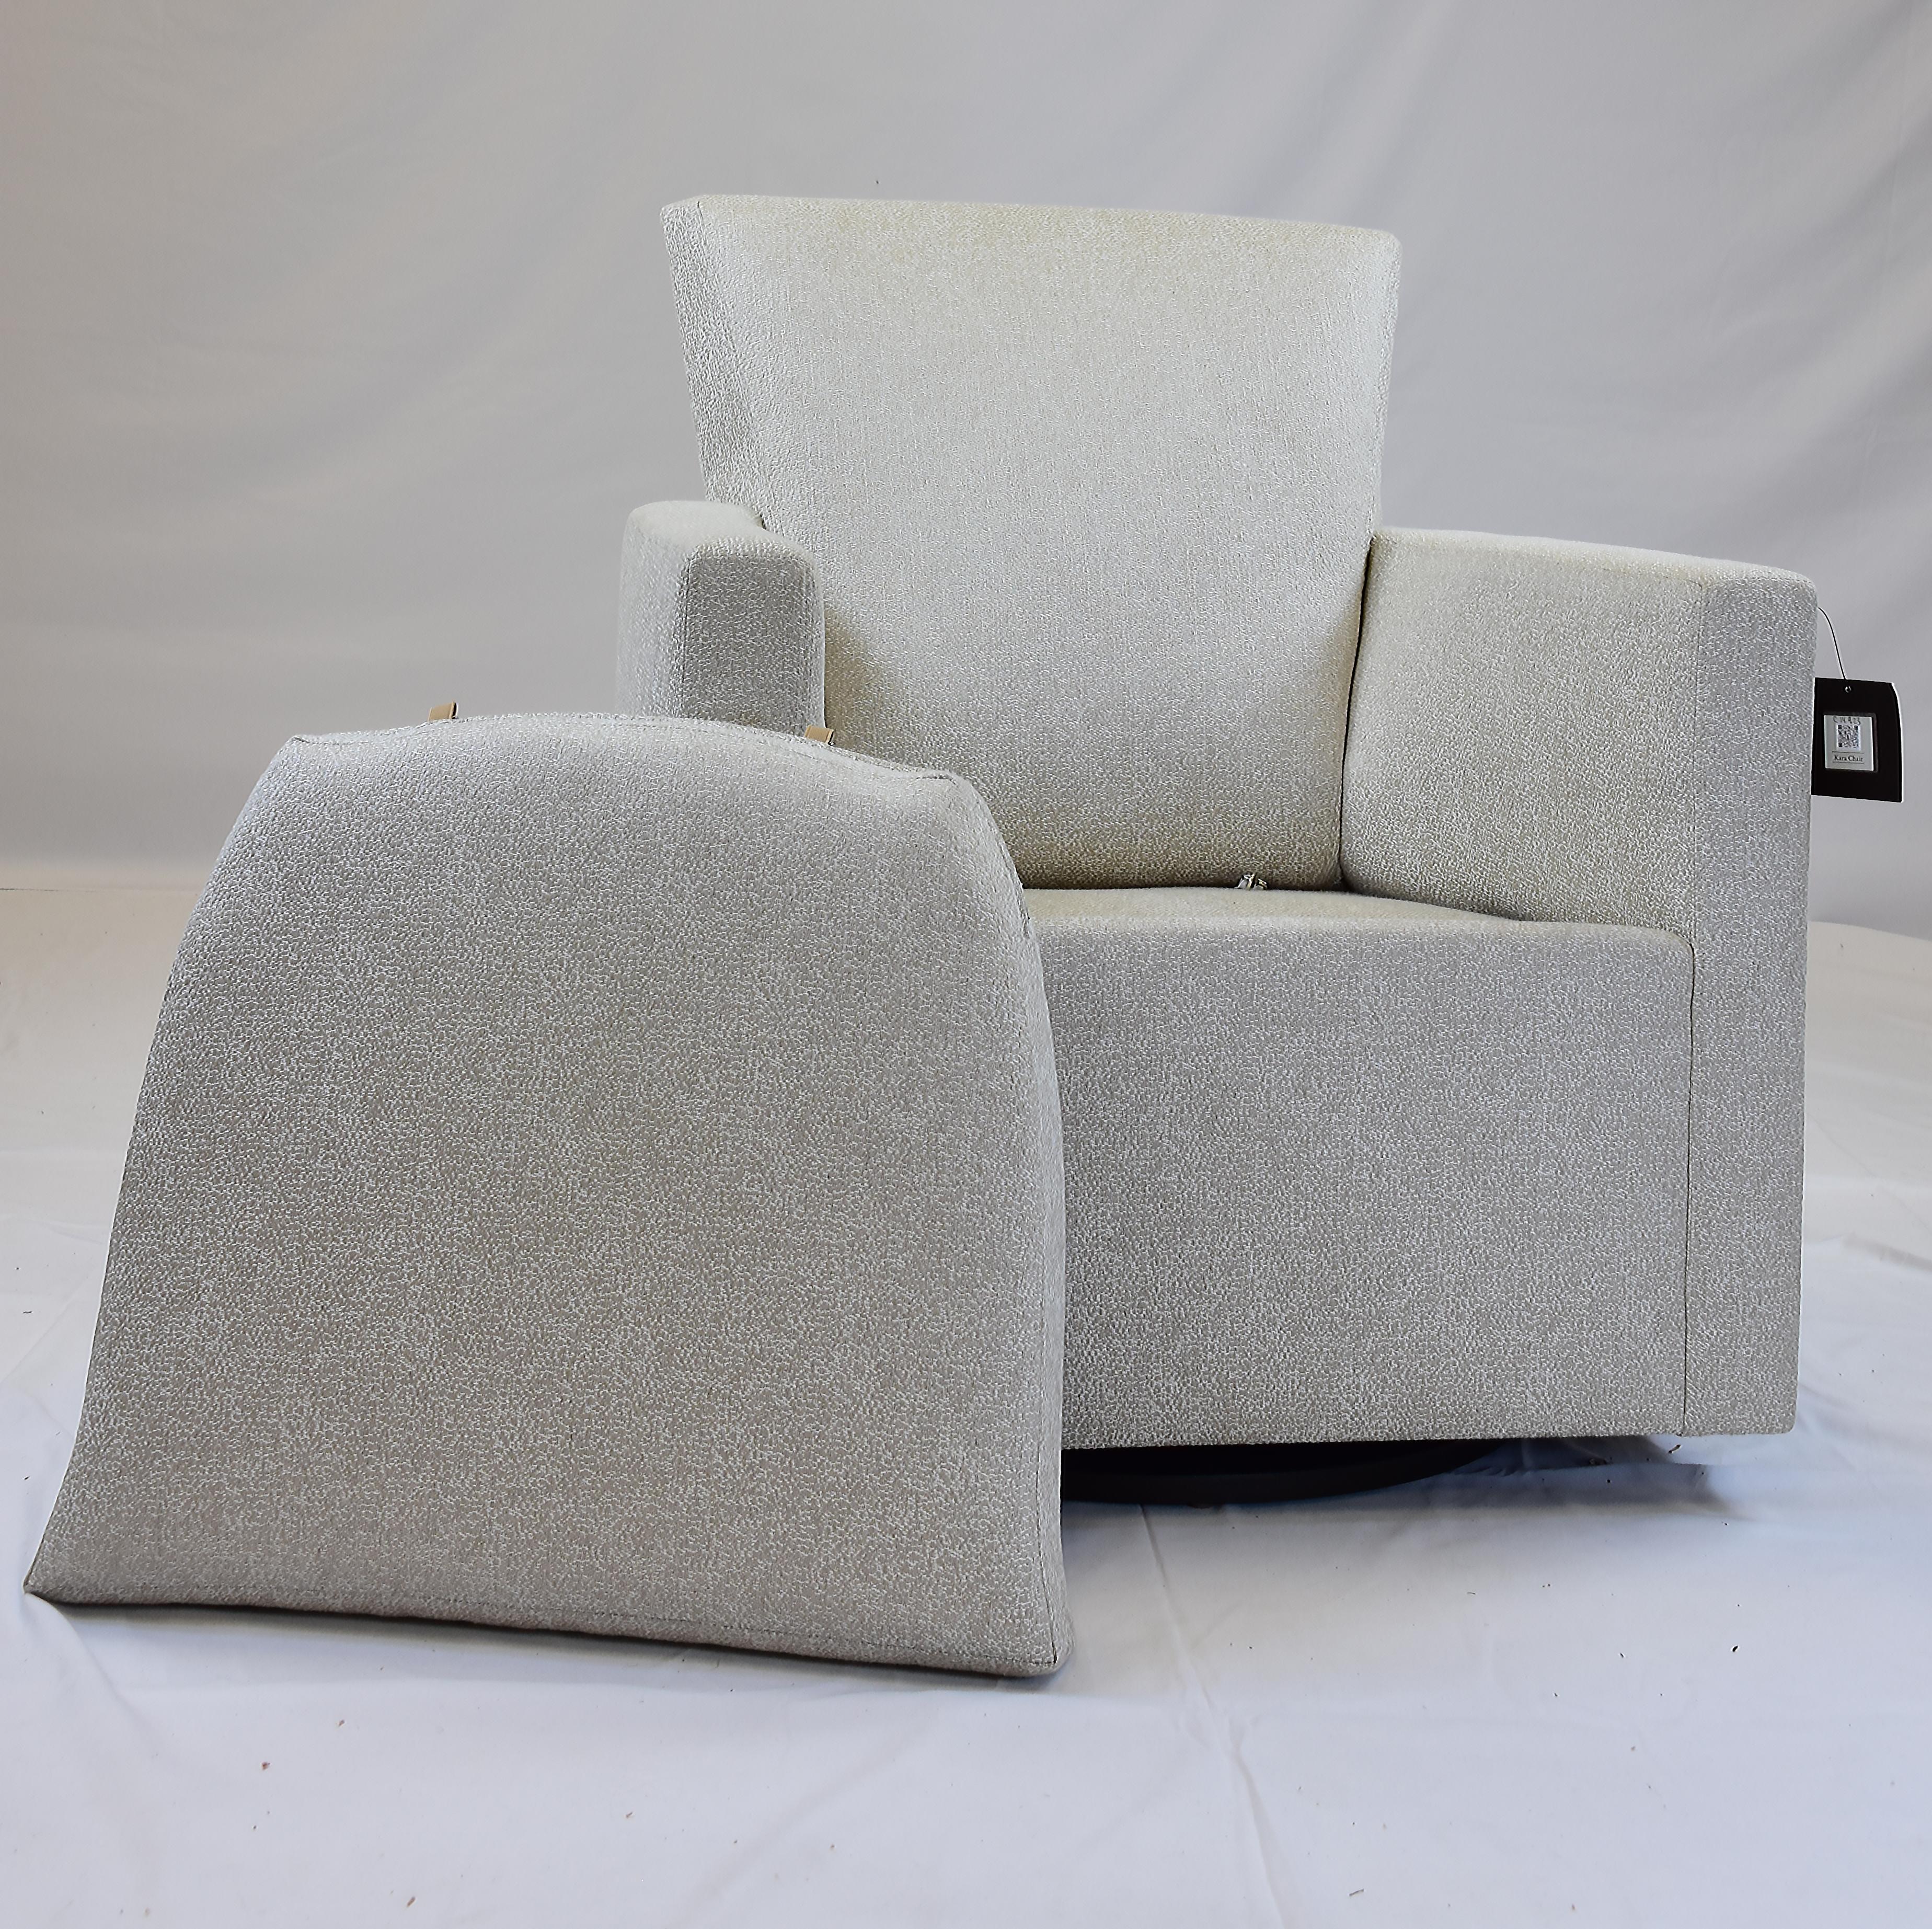 Le Jeune Upholstery Barrel Swivel Kara Chair Showroom Model, 2 Available For Sale 4